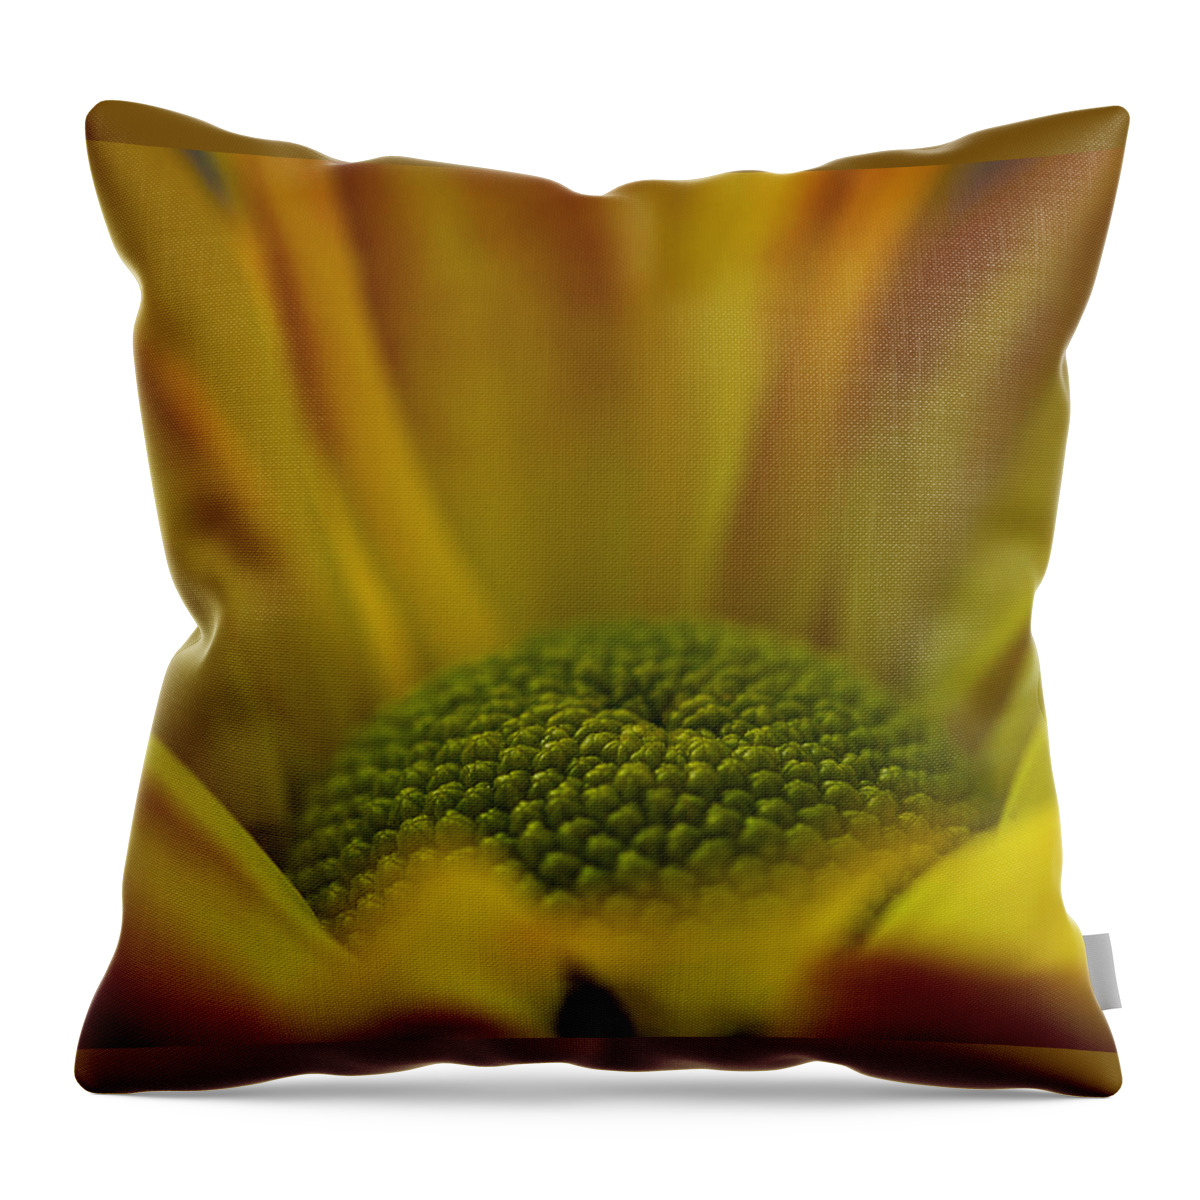 Chrysanthemum Throw Pillow featuring the photograph Chrysanthemum by Morgan Wright